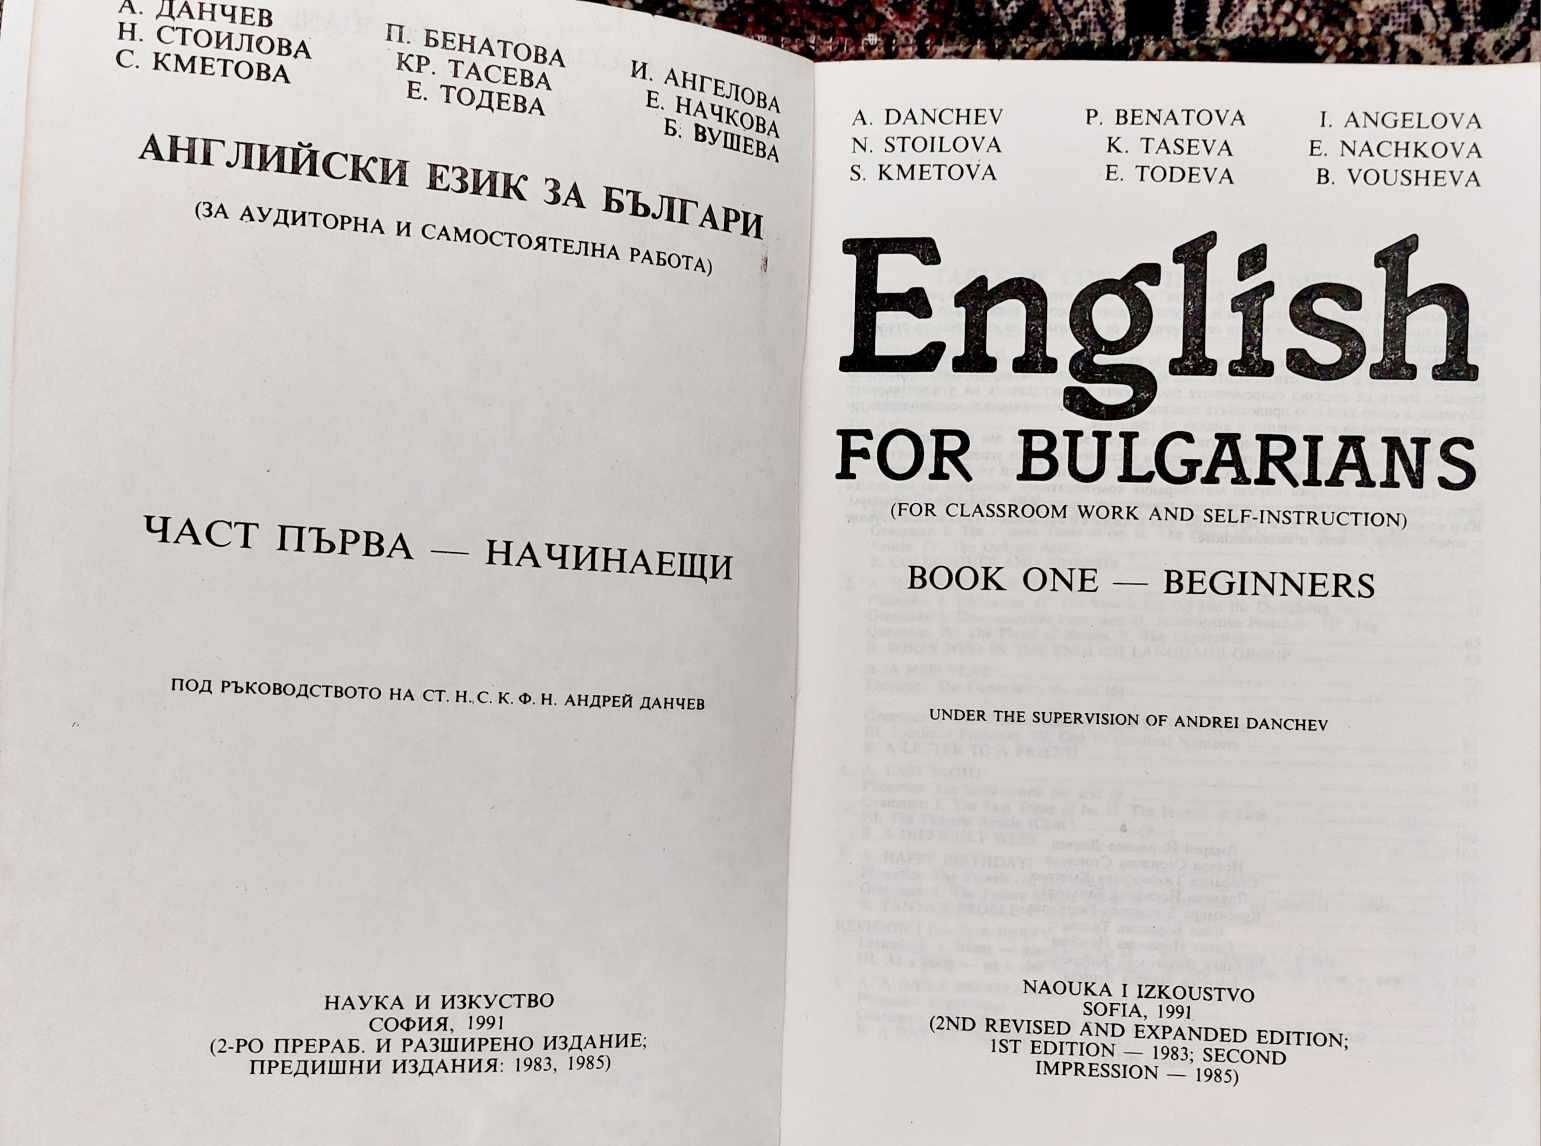 English for Bulgarian